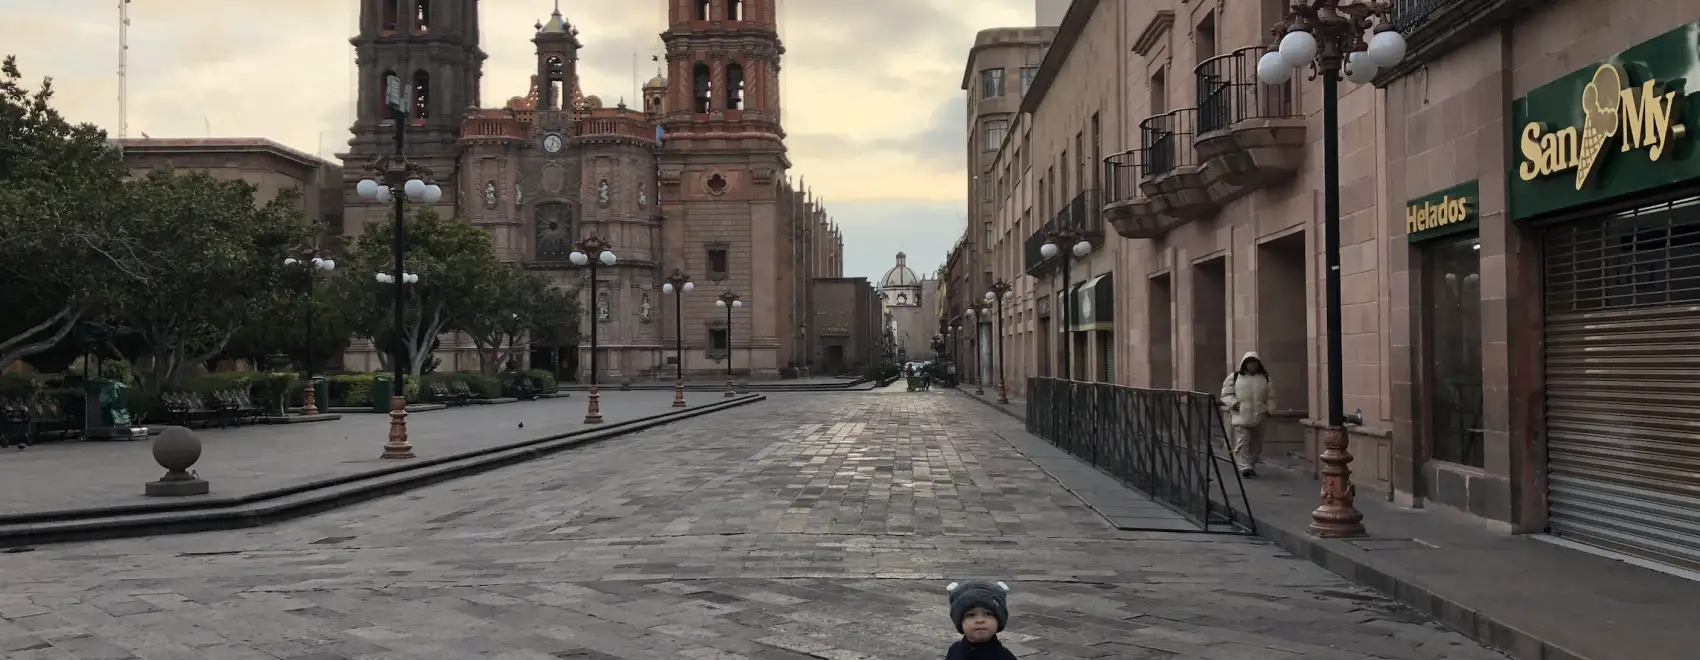 Traveling With a Toddler San Luis Potosi